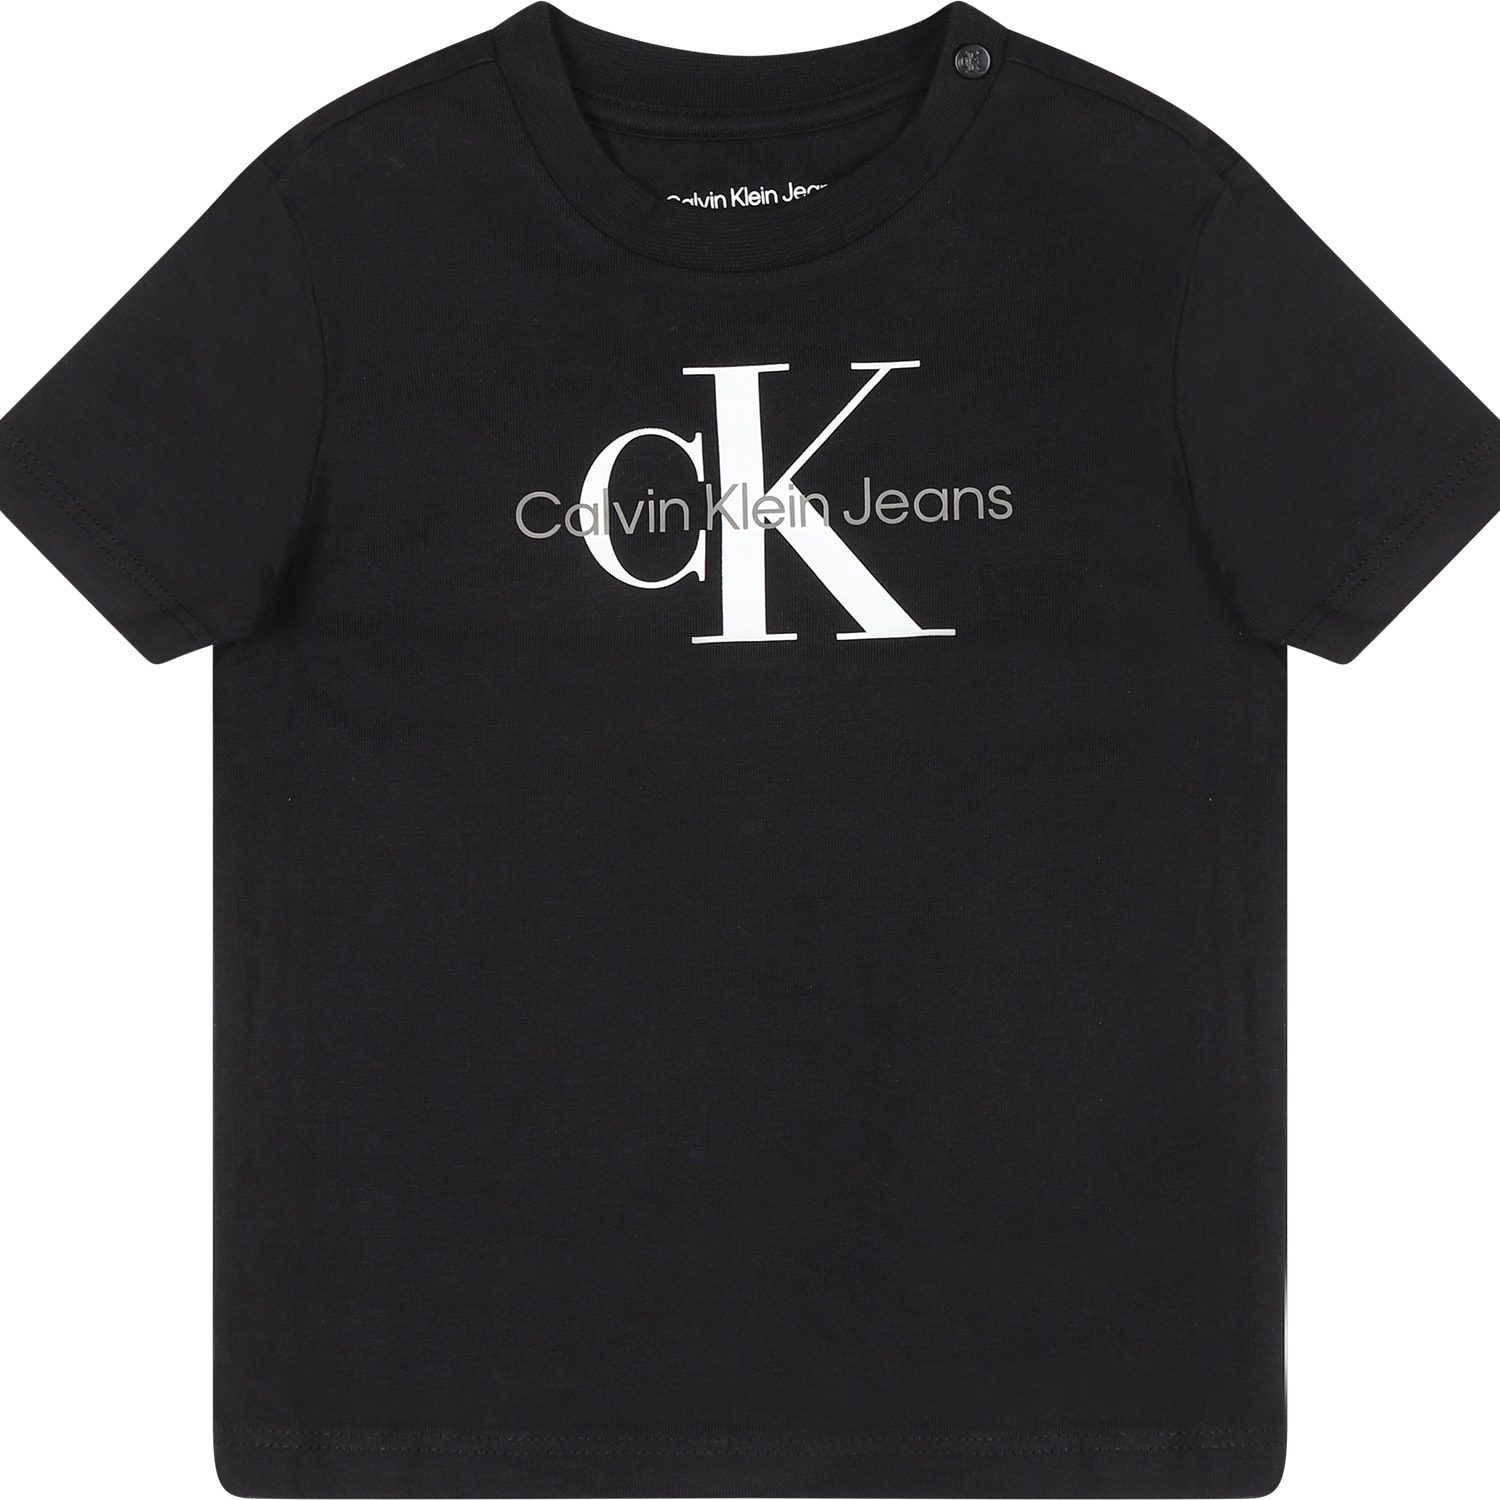 Calvin Klein Black T-shirt For Baby Boy With Logo